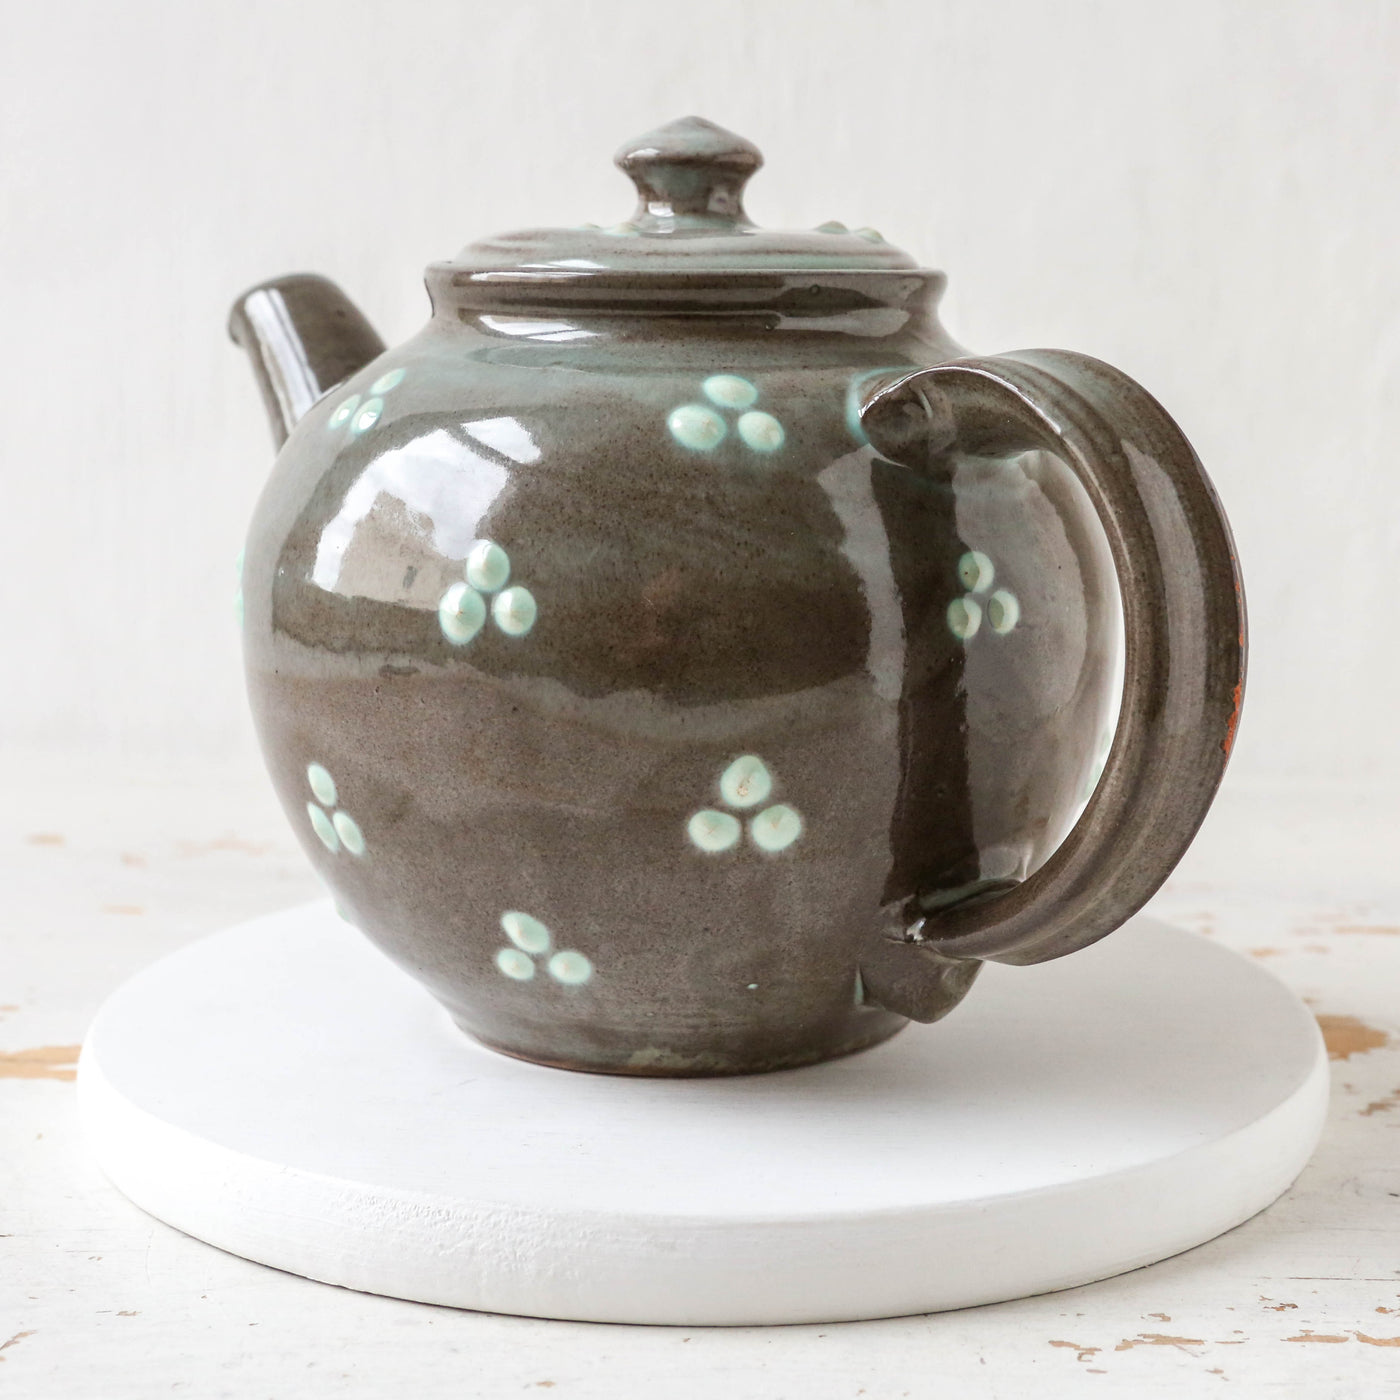 Vintage Slipware Pottery Teapot - Grey with spots design